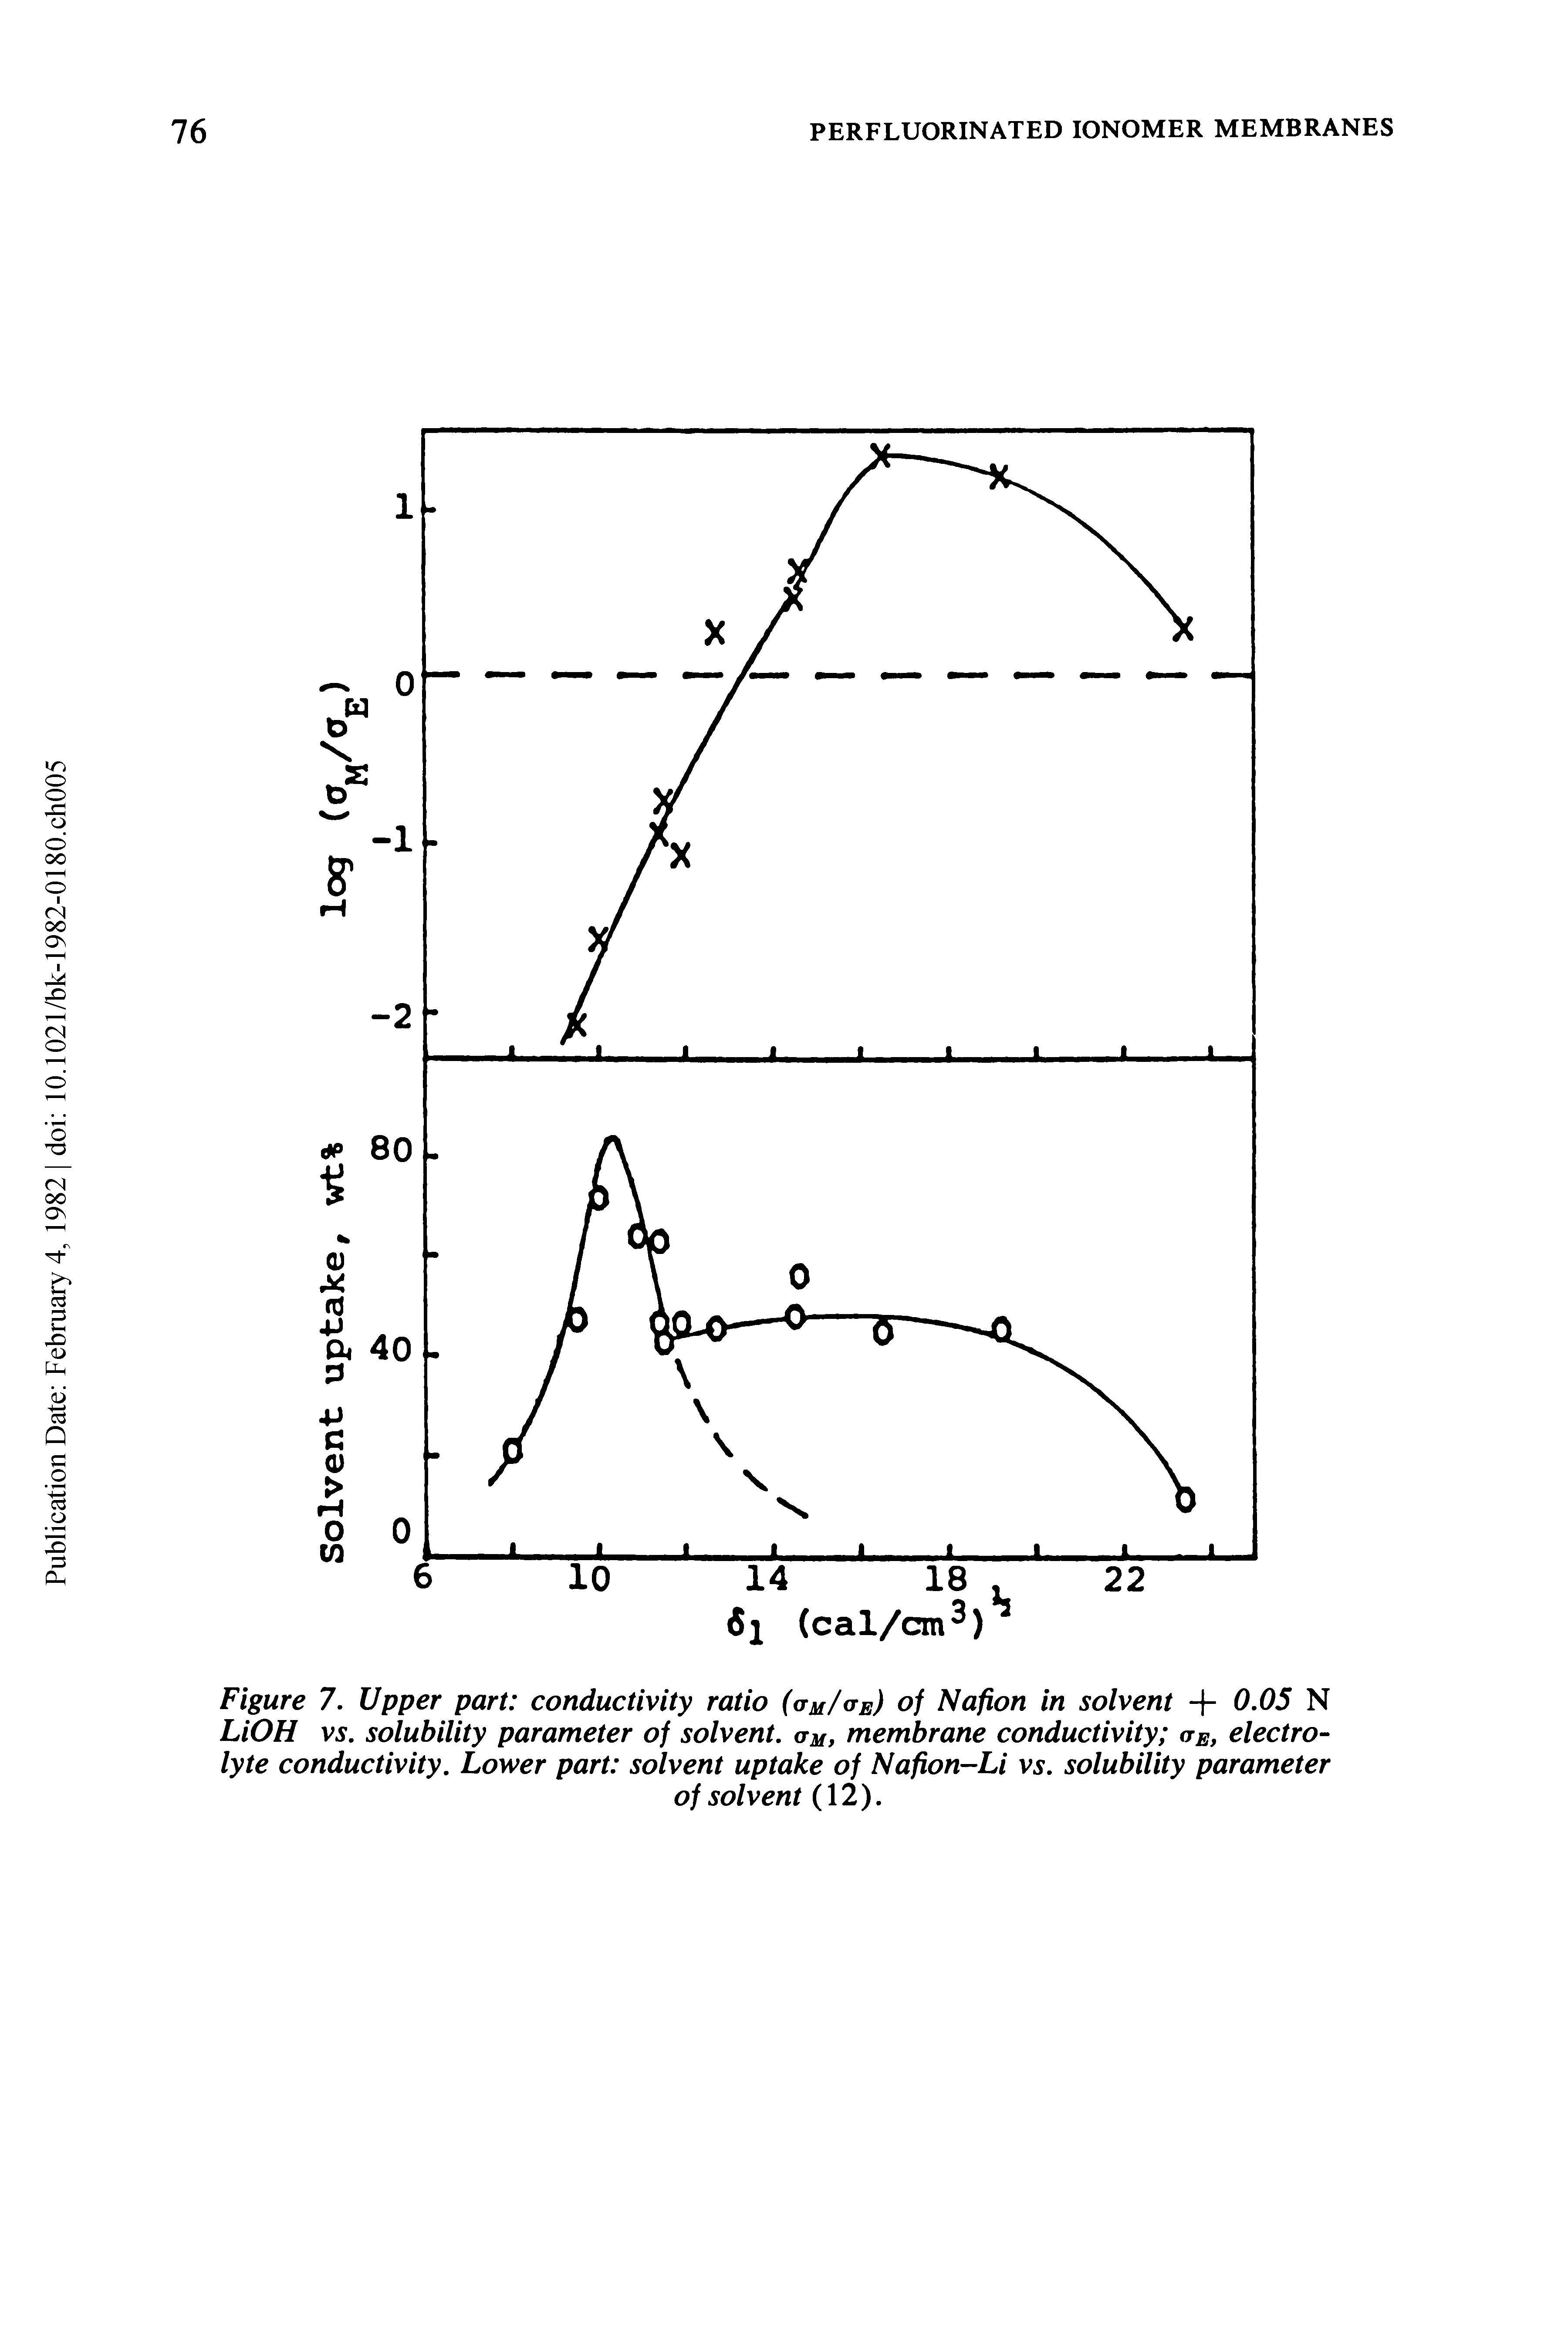 Figure 7. Upper part conductivity ratio (vm/ve) of Nafion in solvent + 0.05 N LiOH vs. solubility parameter of solvent. aM, membrane conductivity <te, electrolyte conductivity. Lower part solvent uptake of Nafion-Li vs. solubility parameter...